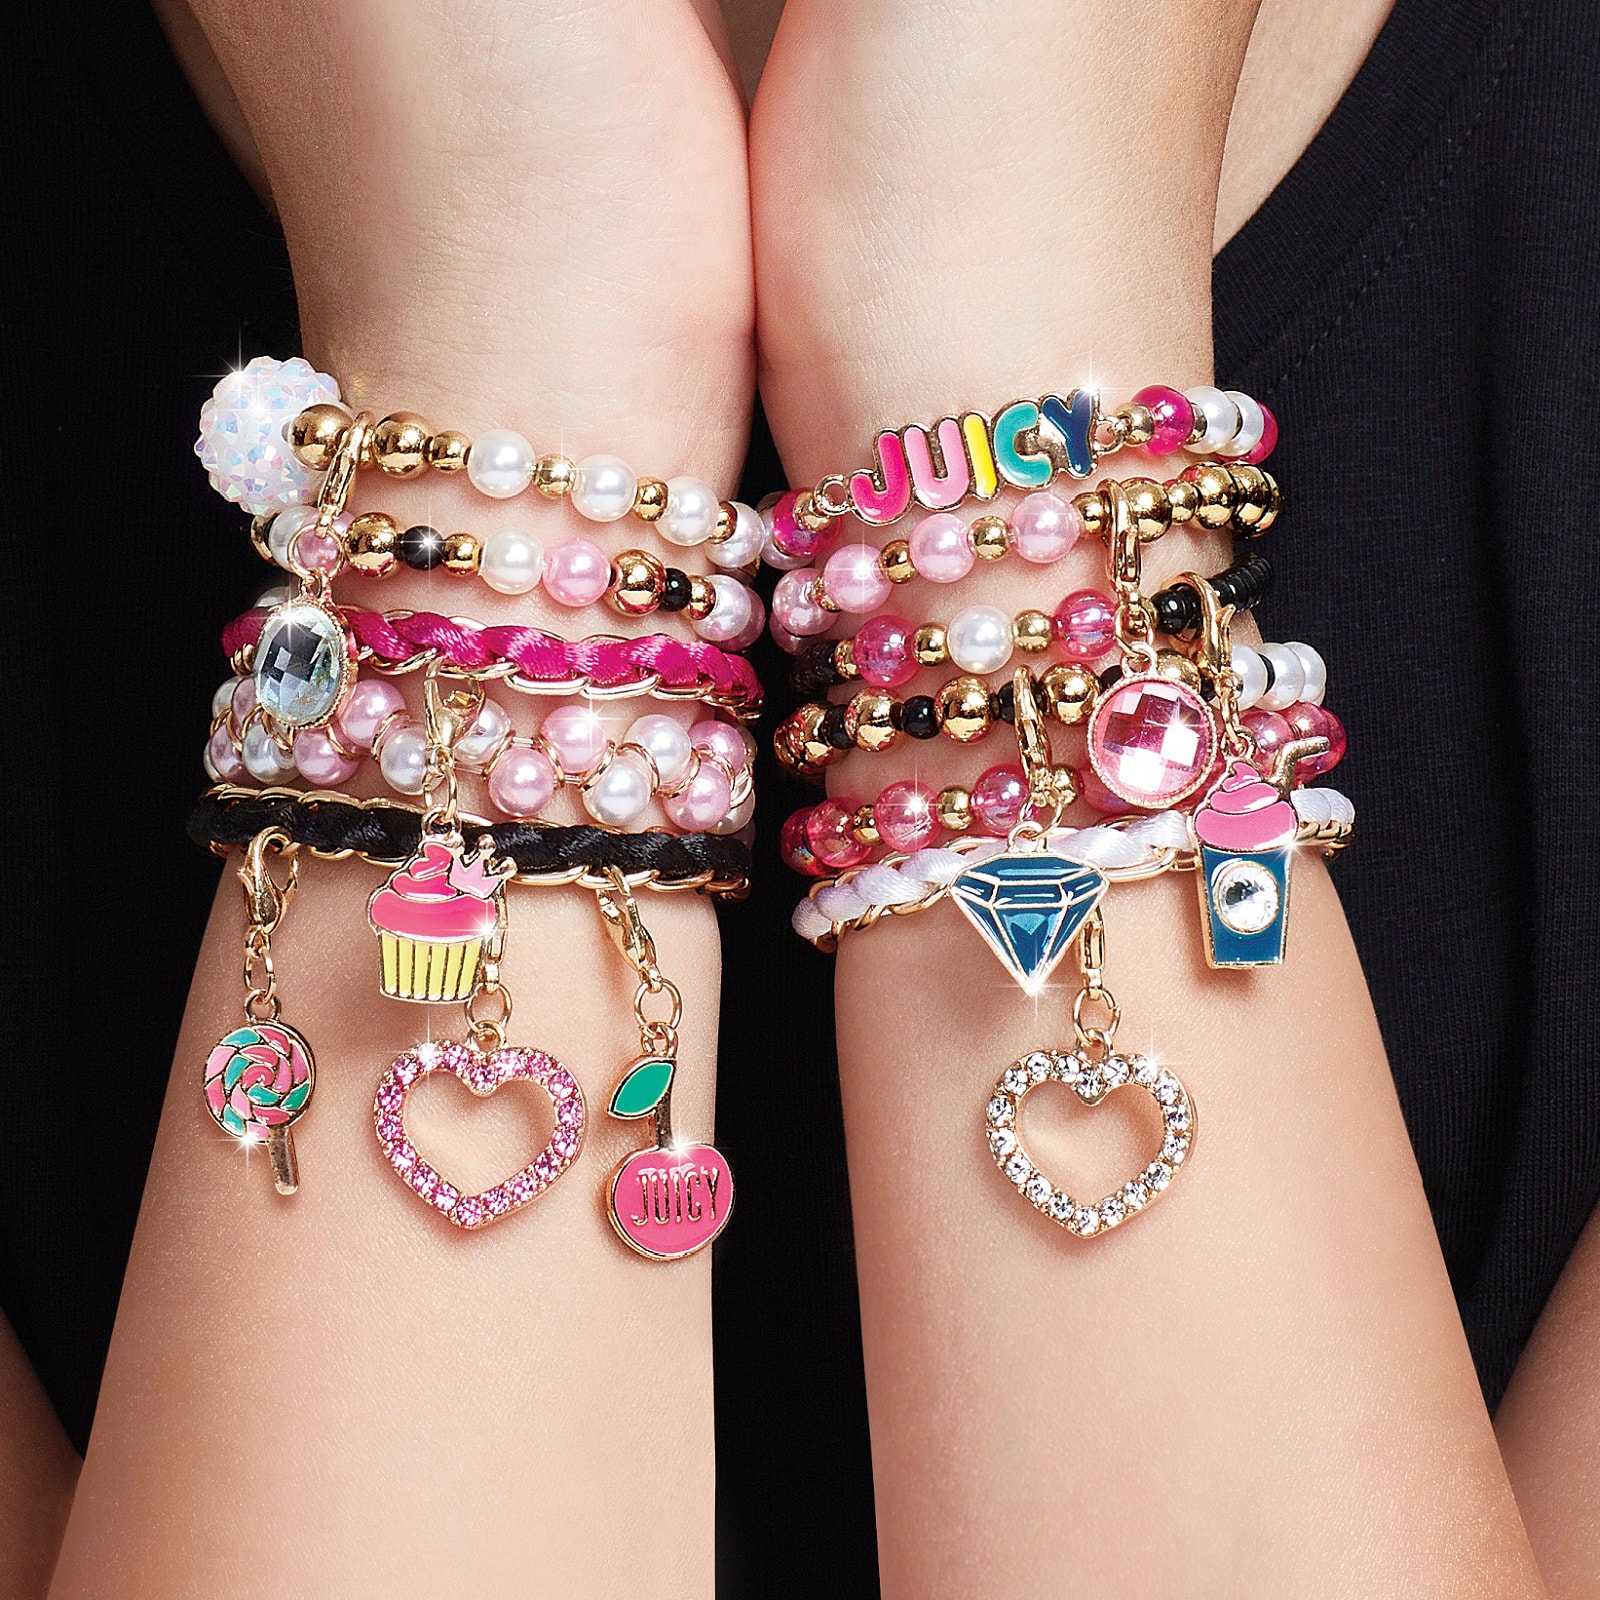 Juicy Couture Make it Real™ Pink & Precious Bracelet Kit